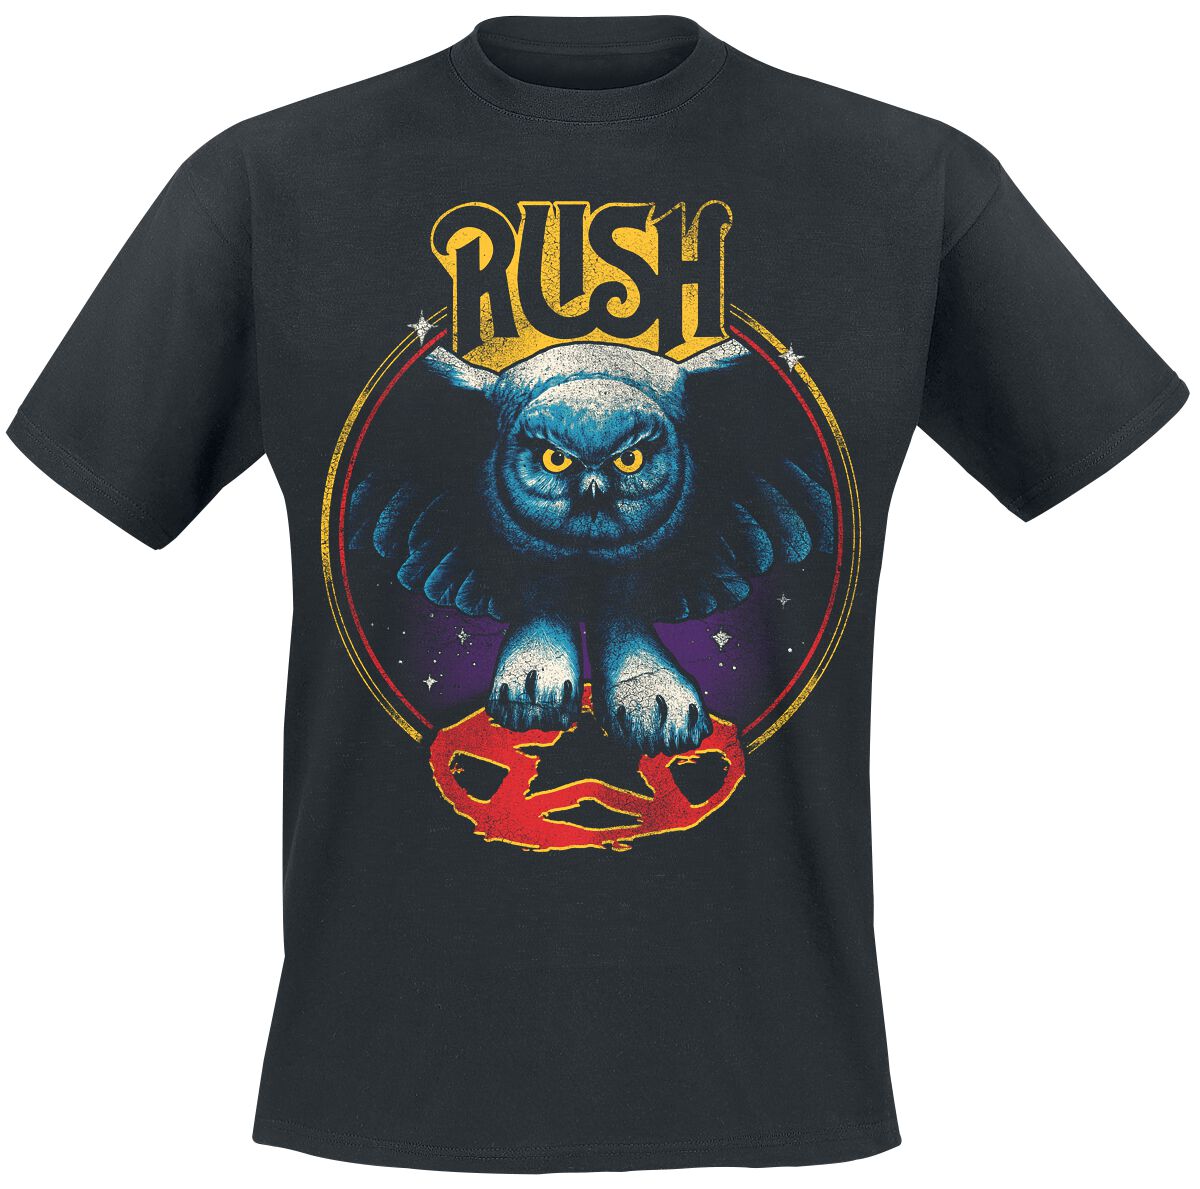 Rush Owl Star T-Shirt schwarz in XXL